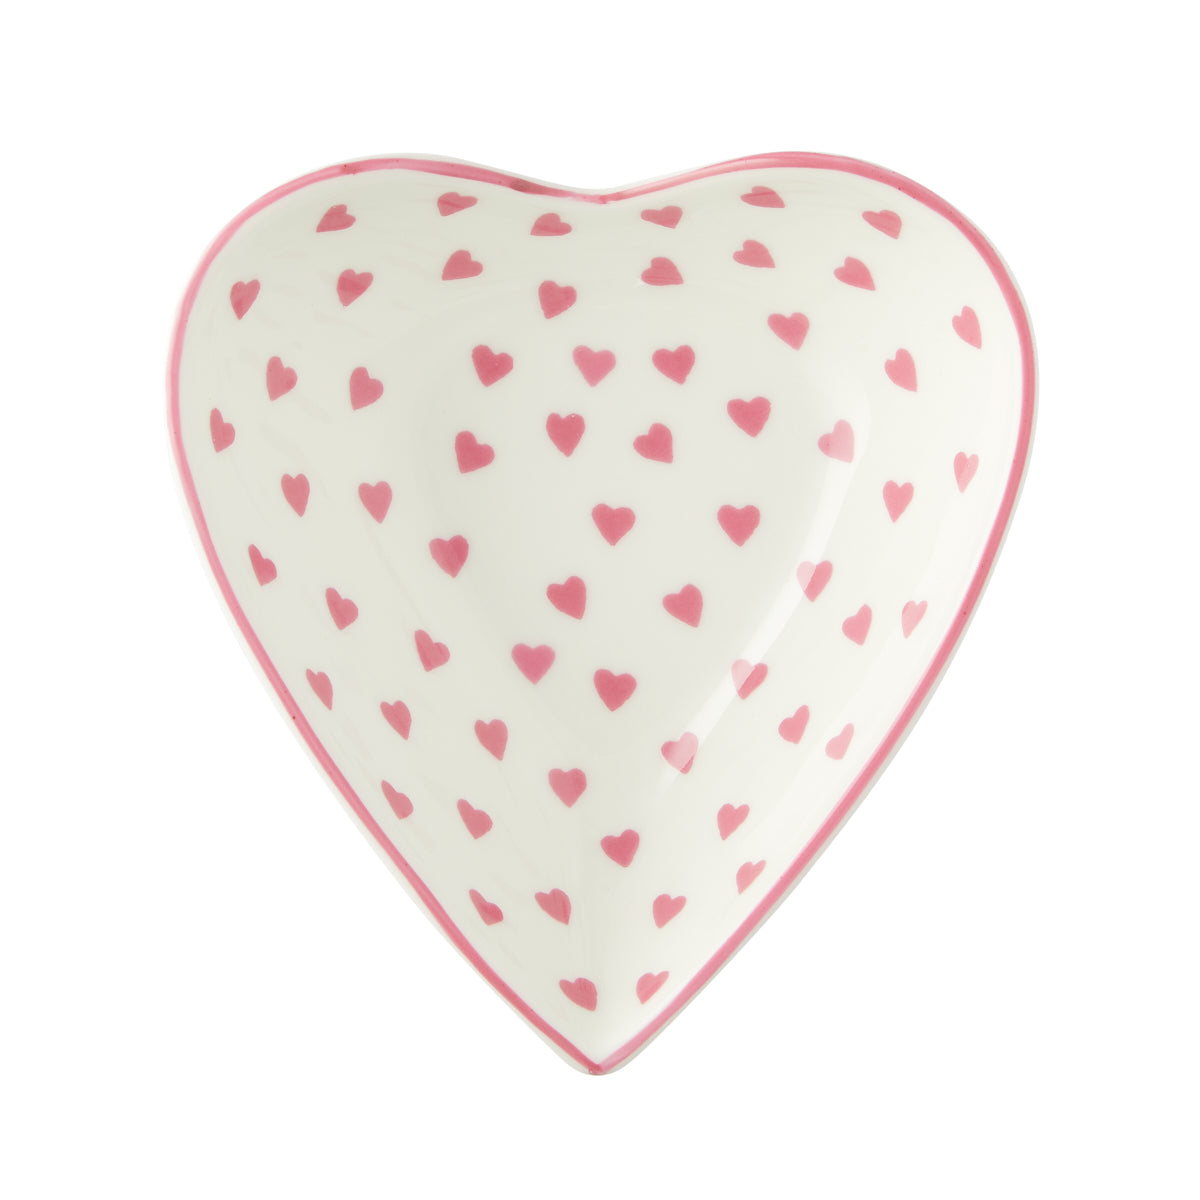 Nina Campbell Small Heart Dish  - Pink Heart